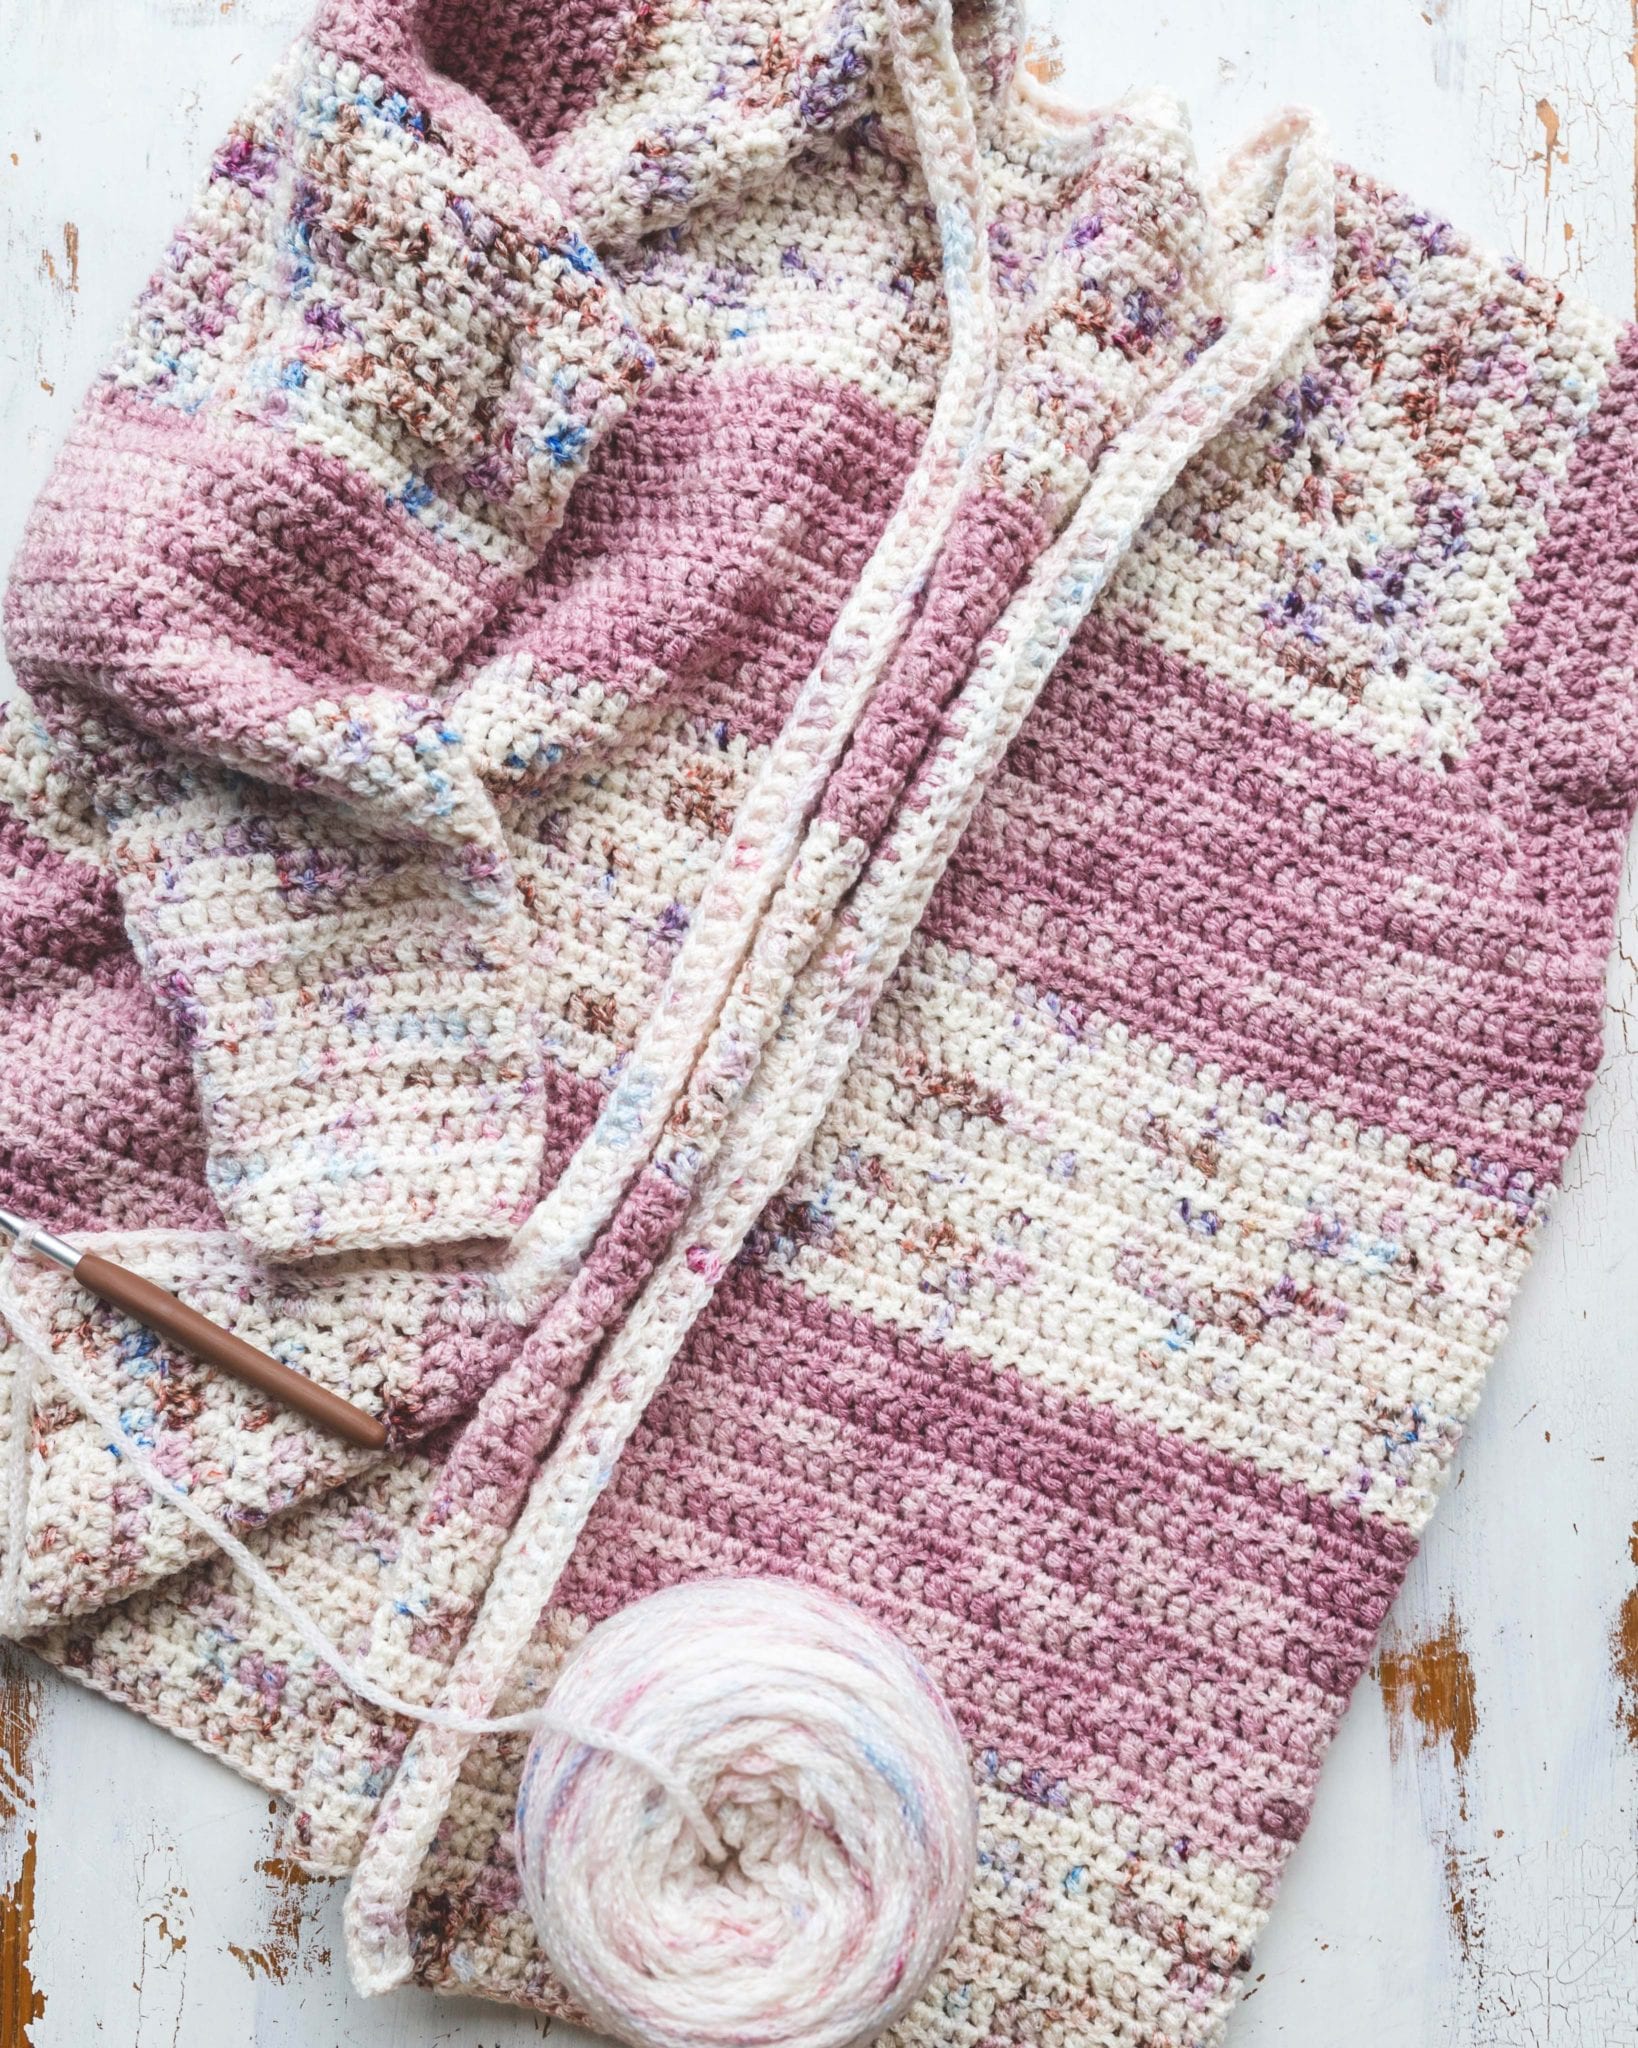 Ravelry: Crochet Finger Guard pattern by Genevieve Kiger